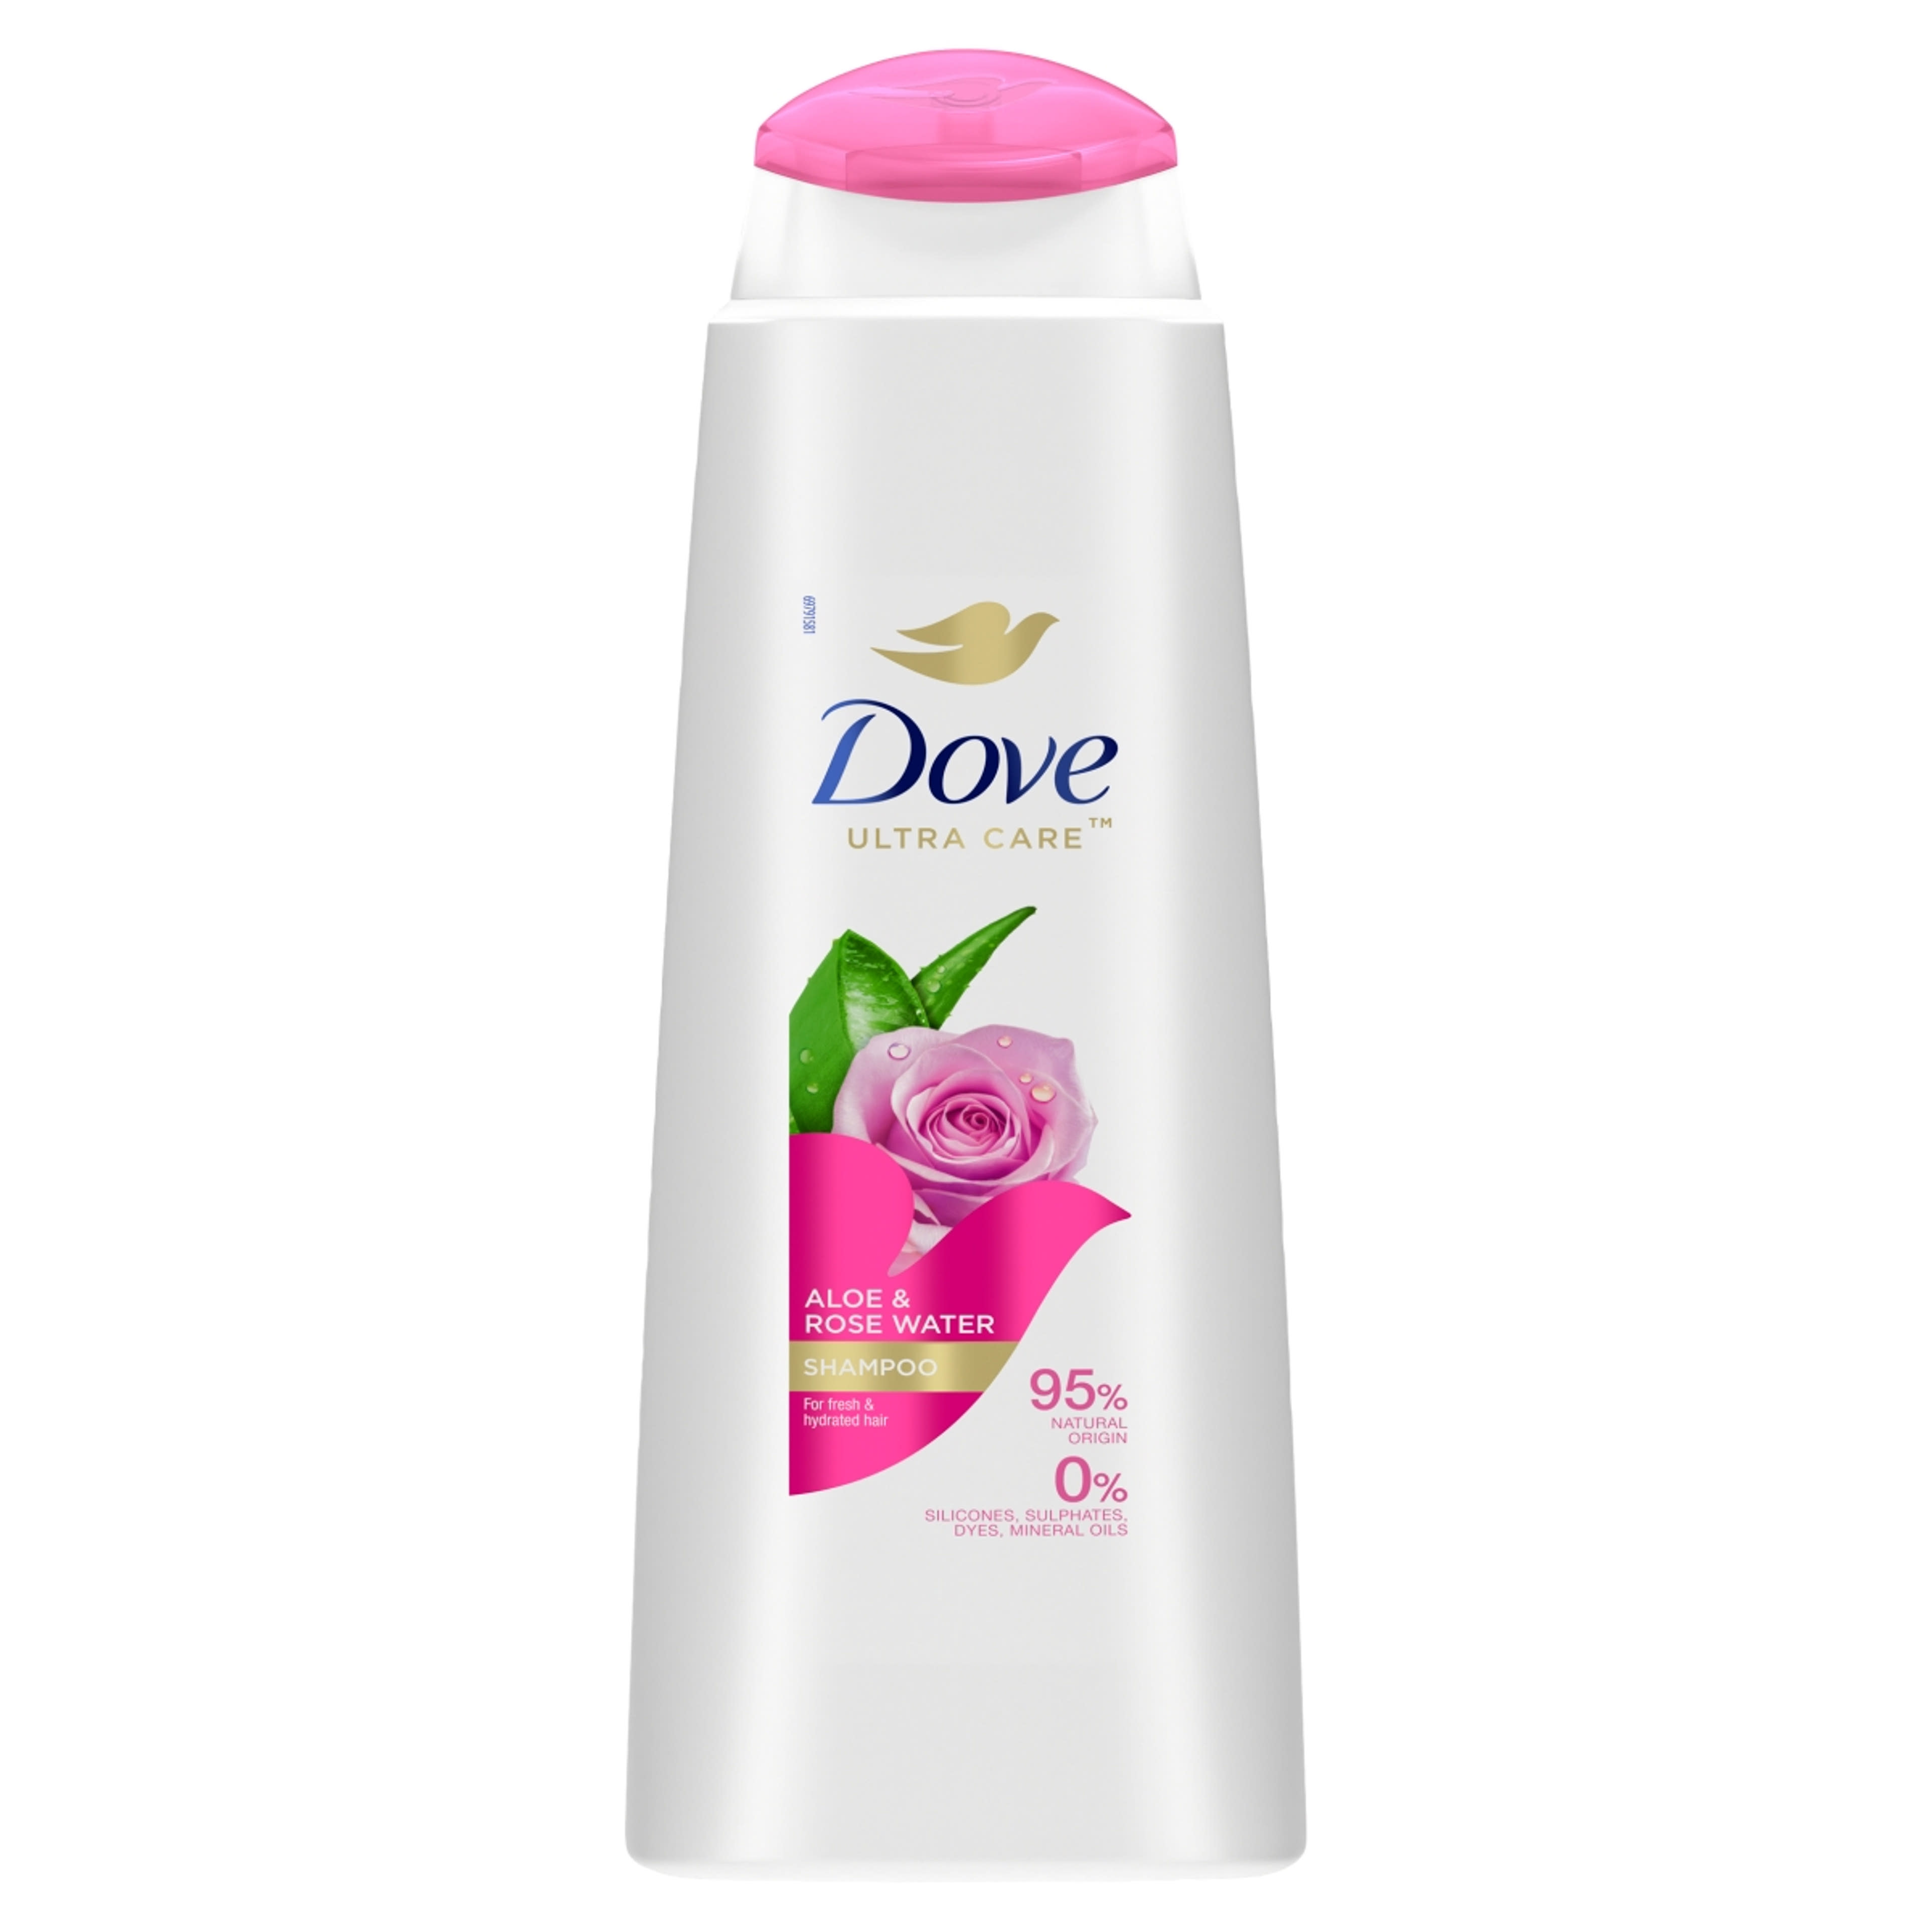 Dove Aloe Vera&Rose Water sampon száraz hajra - 400 ml-2